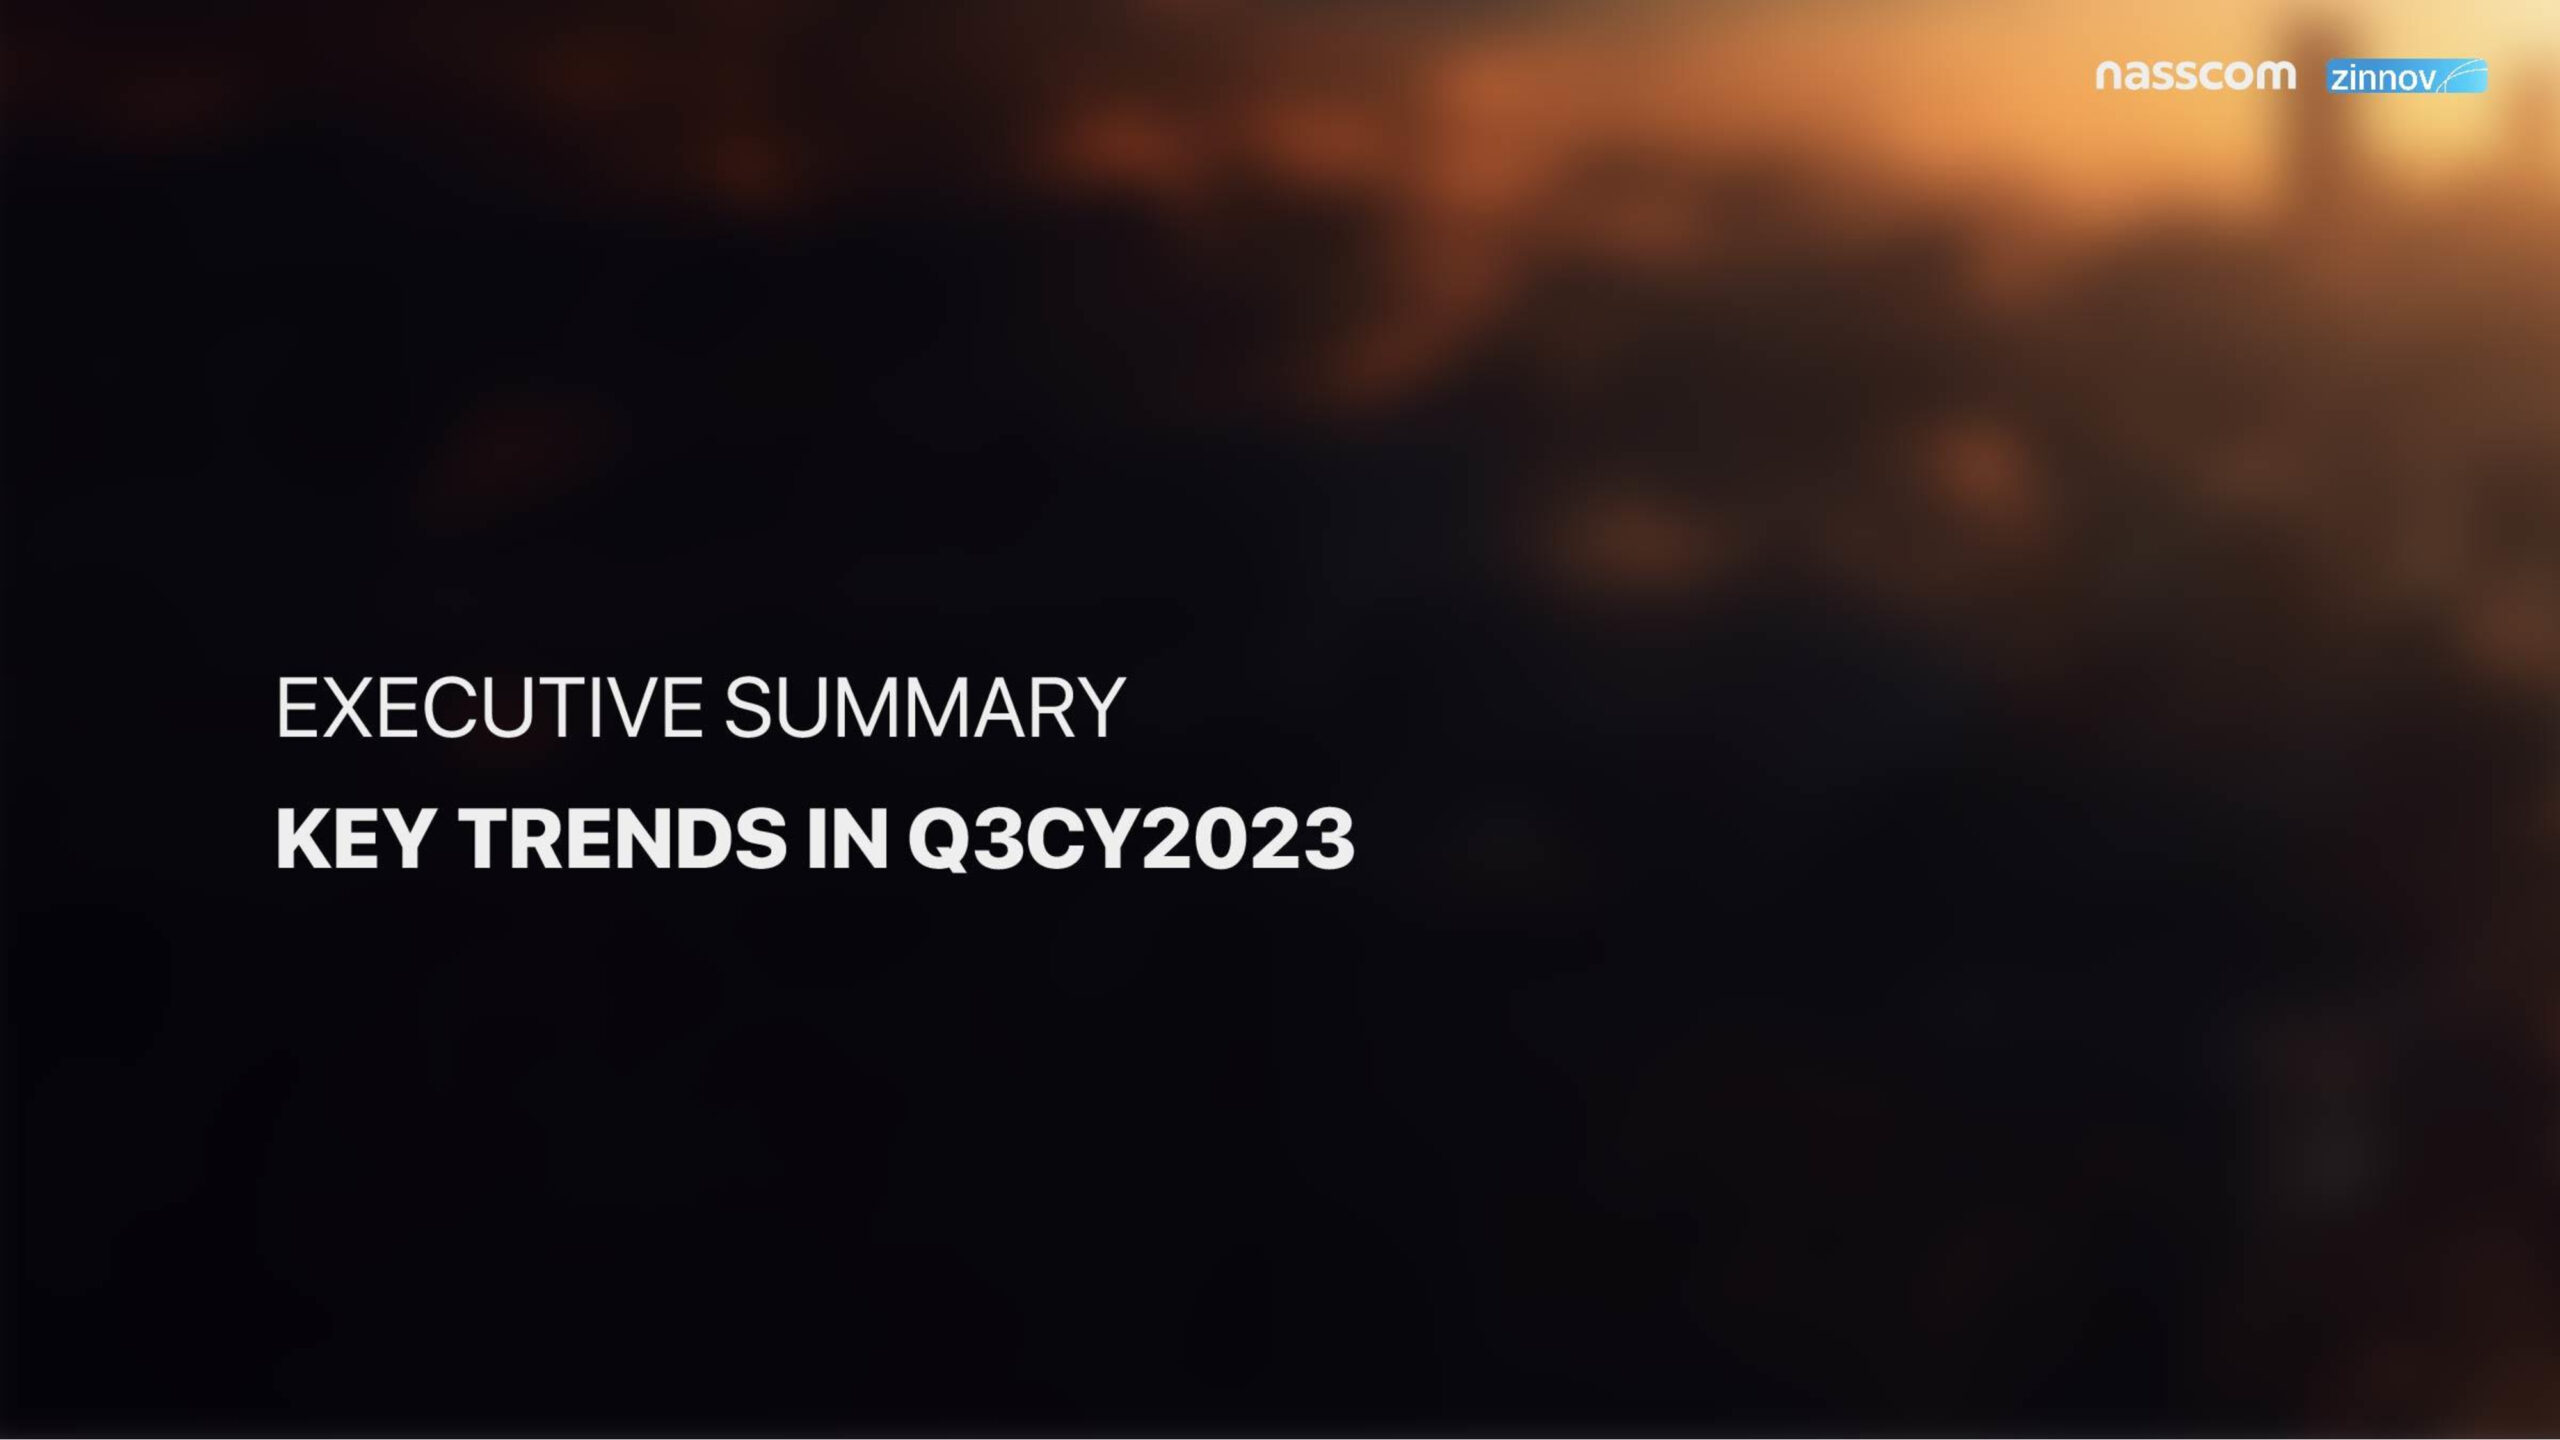 Zinnov Nasscom India Gcc Trends Quarterly Analysis Q3 2023 Report 11dec20234 Scaled